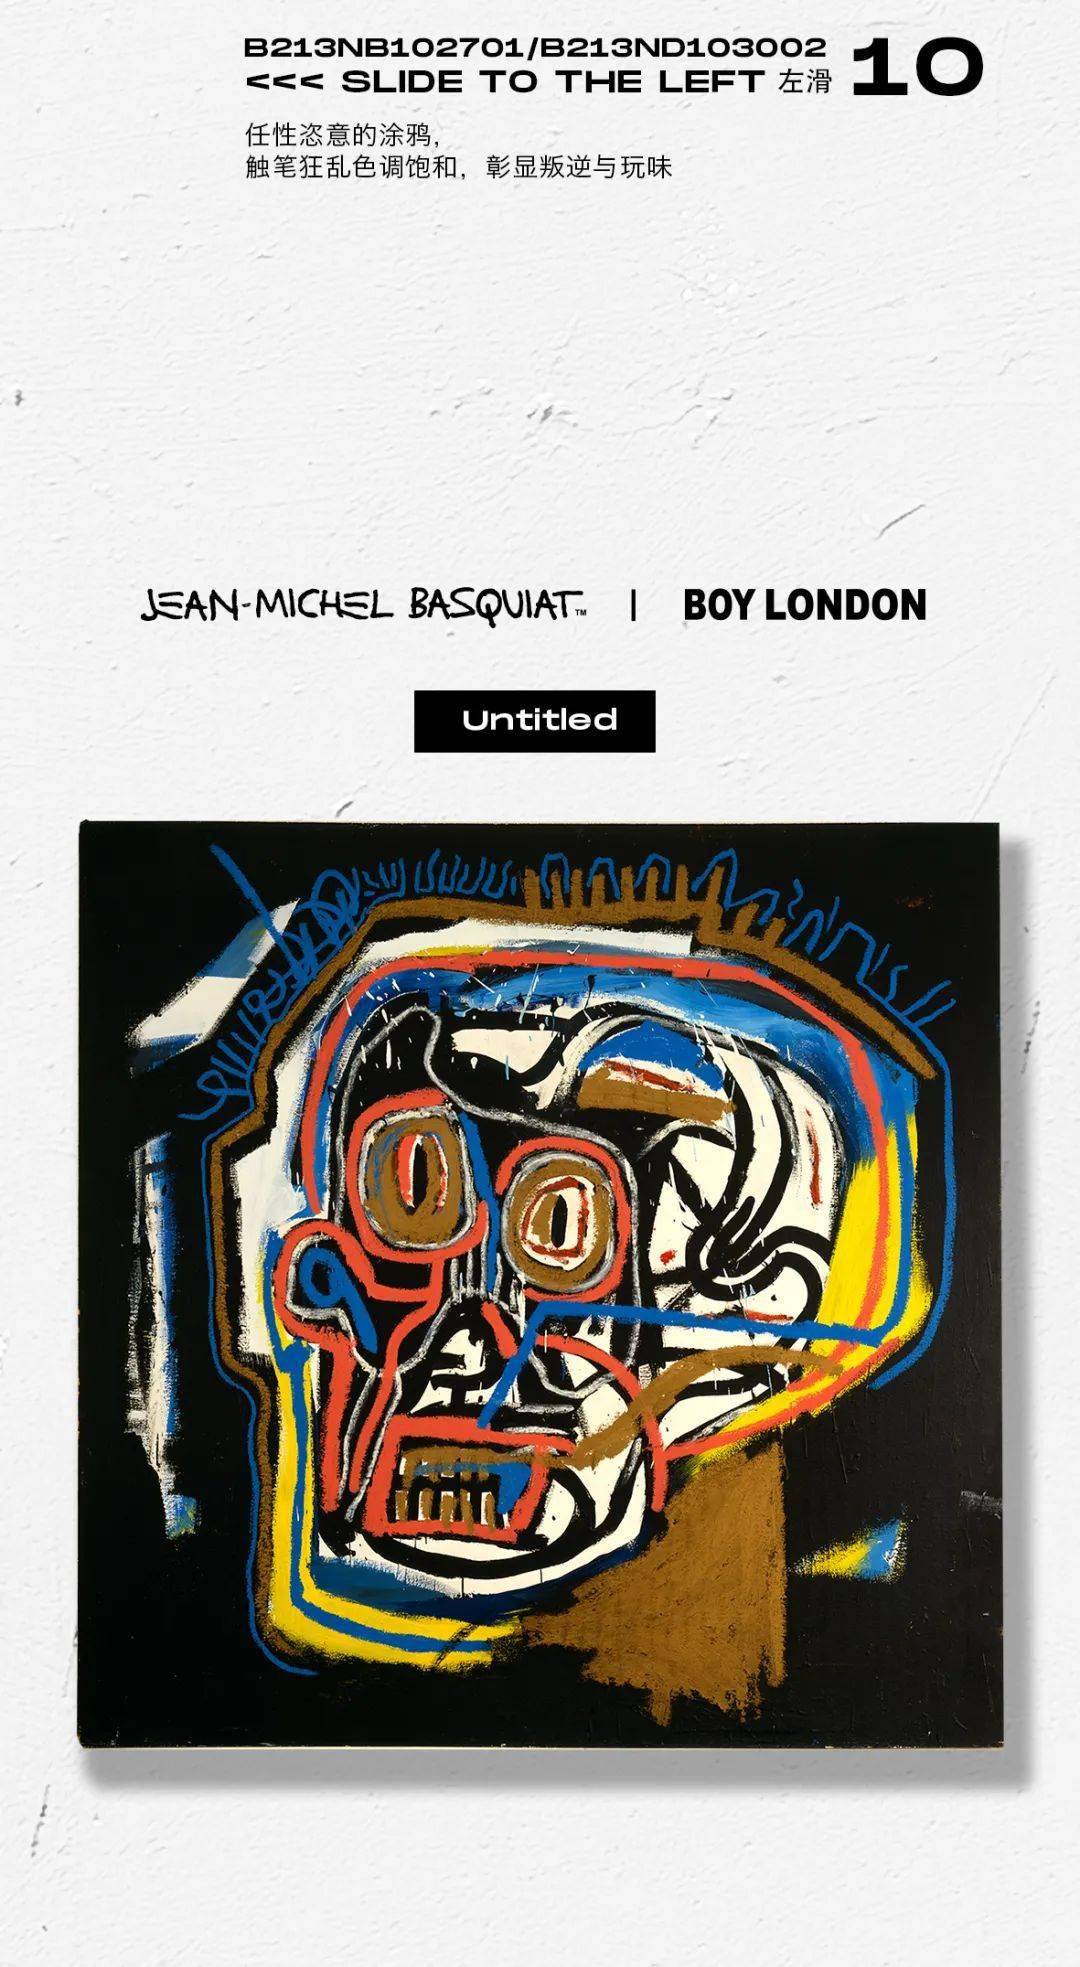 boy london x jean-michel basquiat | 联名系列到来!